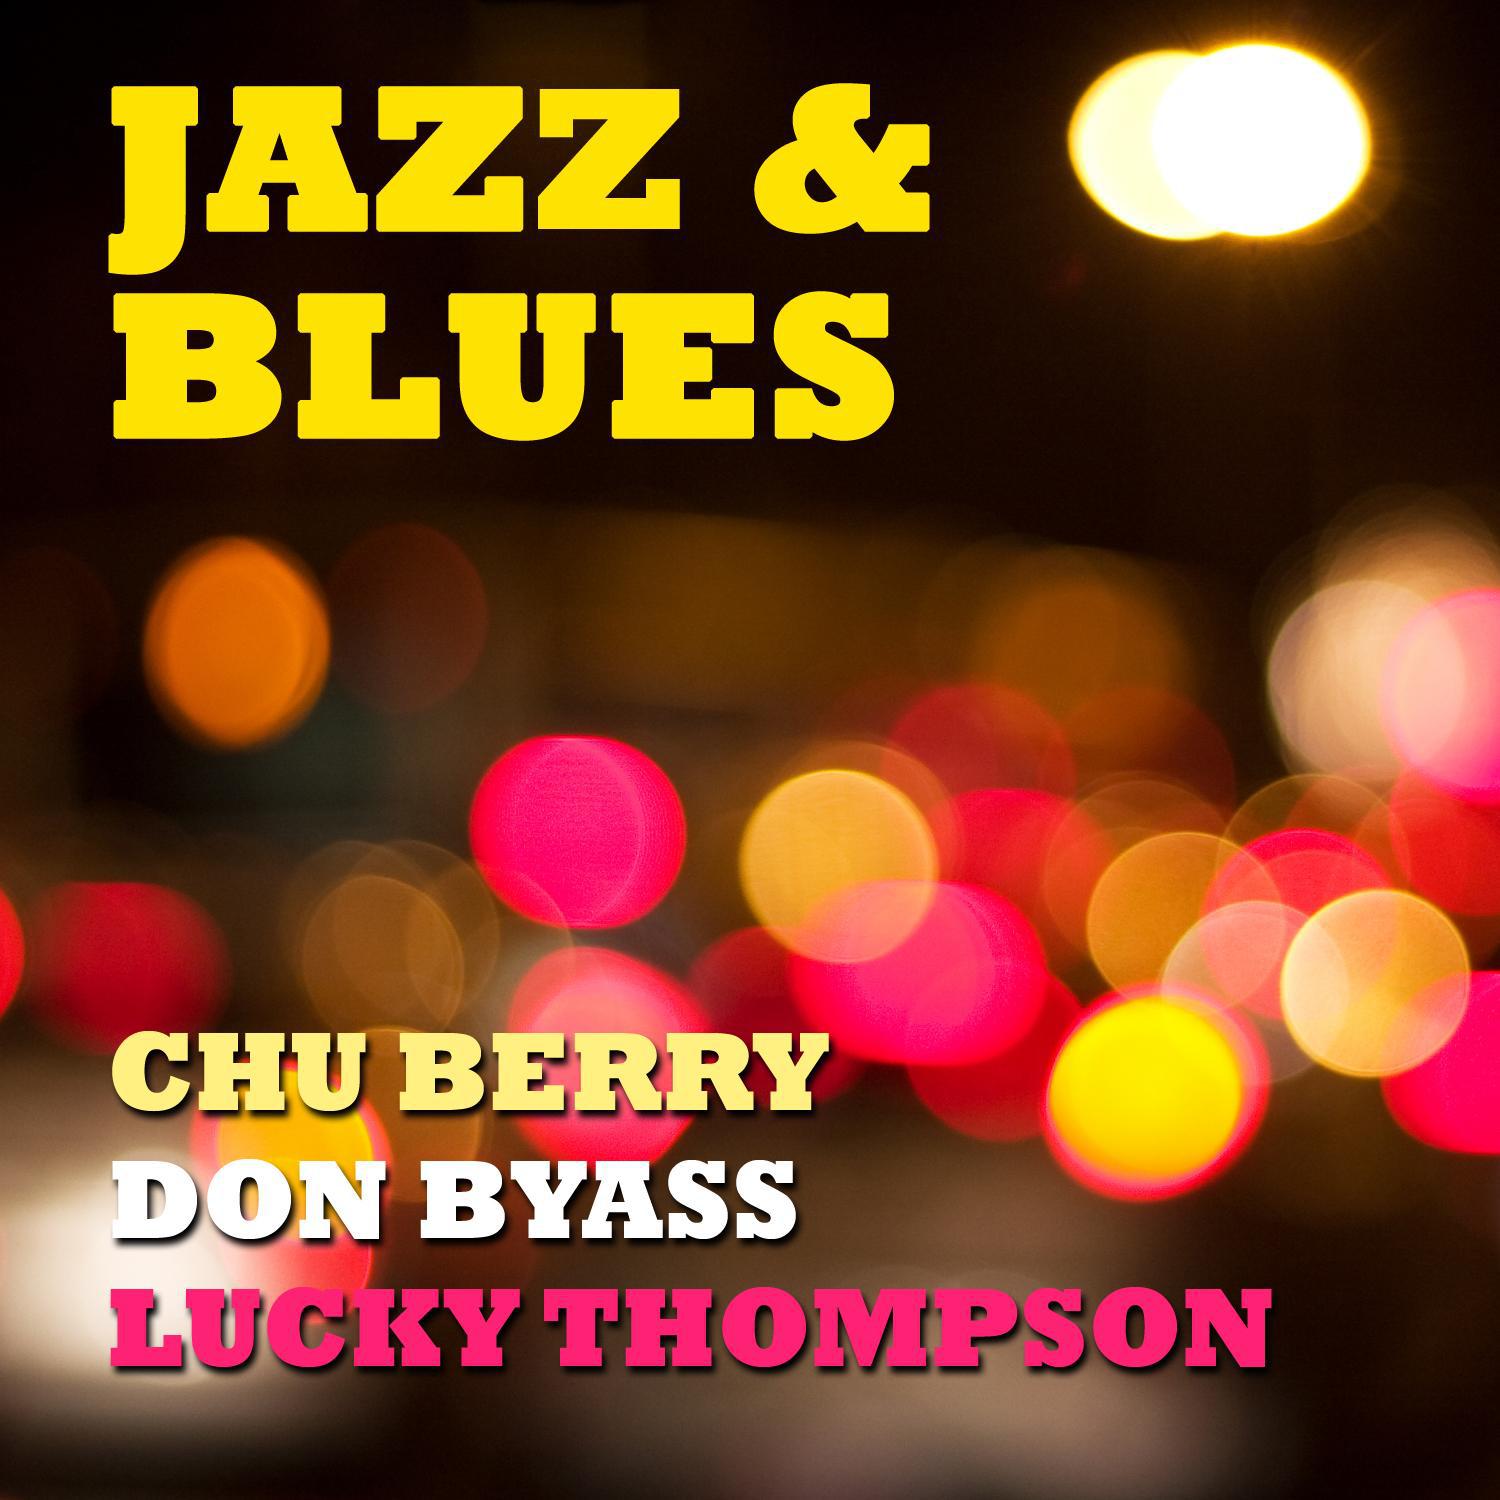 Jazz & Blues Chu Berry, Don Byass & Lucky Thompson